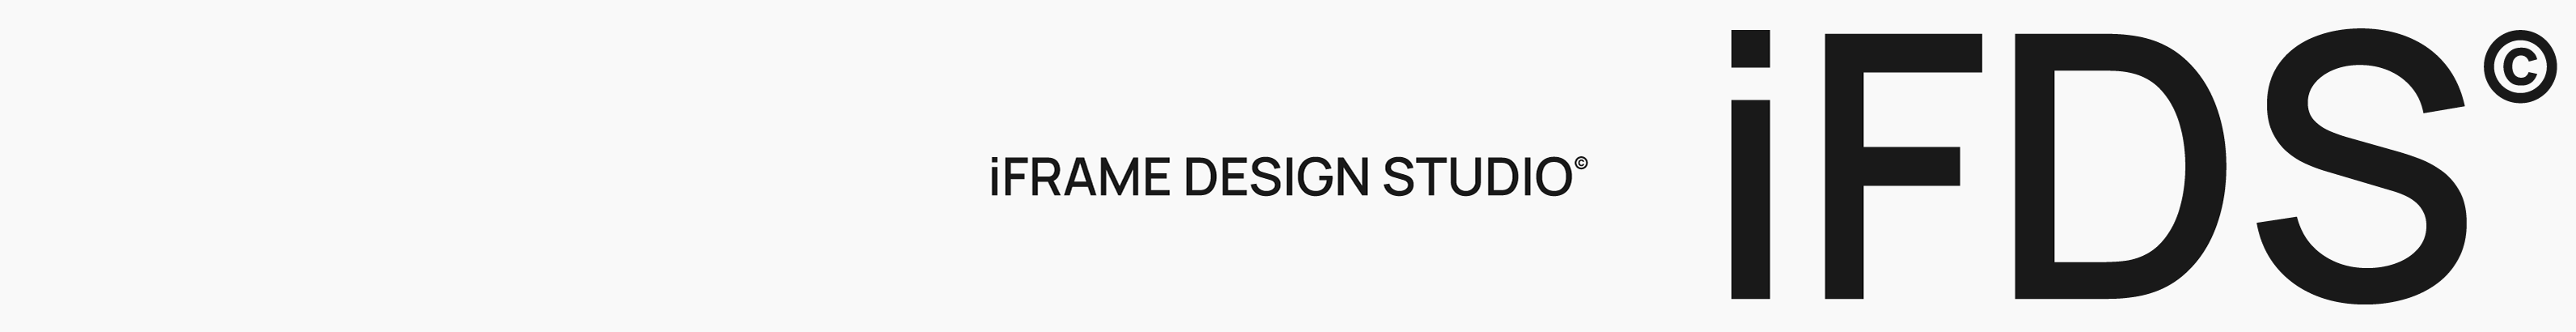 iframe design studio's profile banner